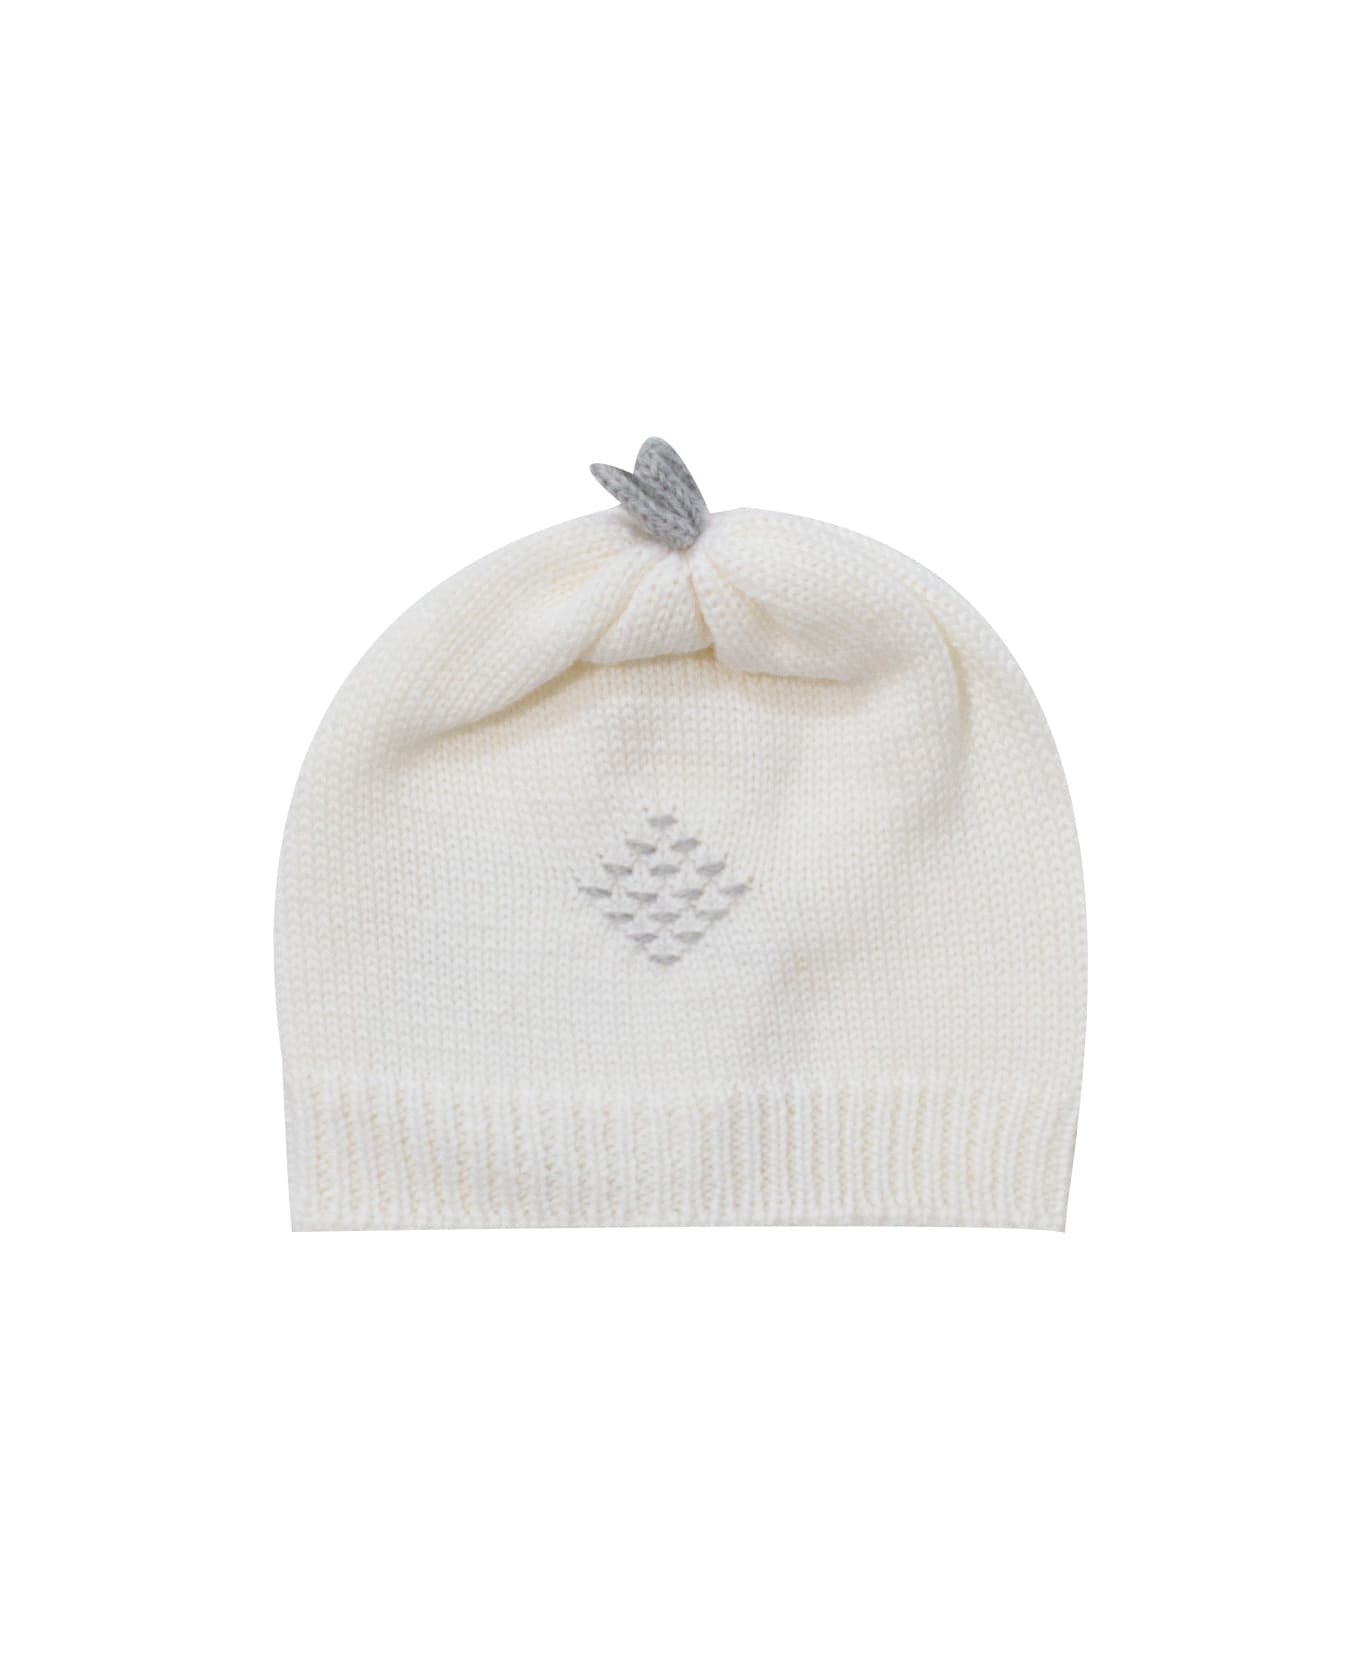 Piccola Giuggiola Wool Knit Hat - White